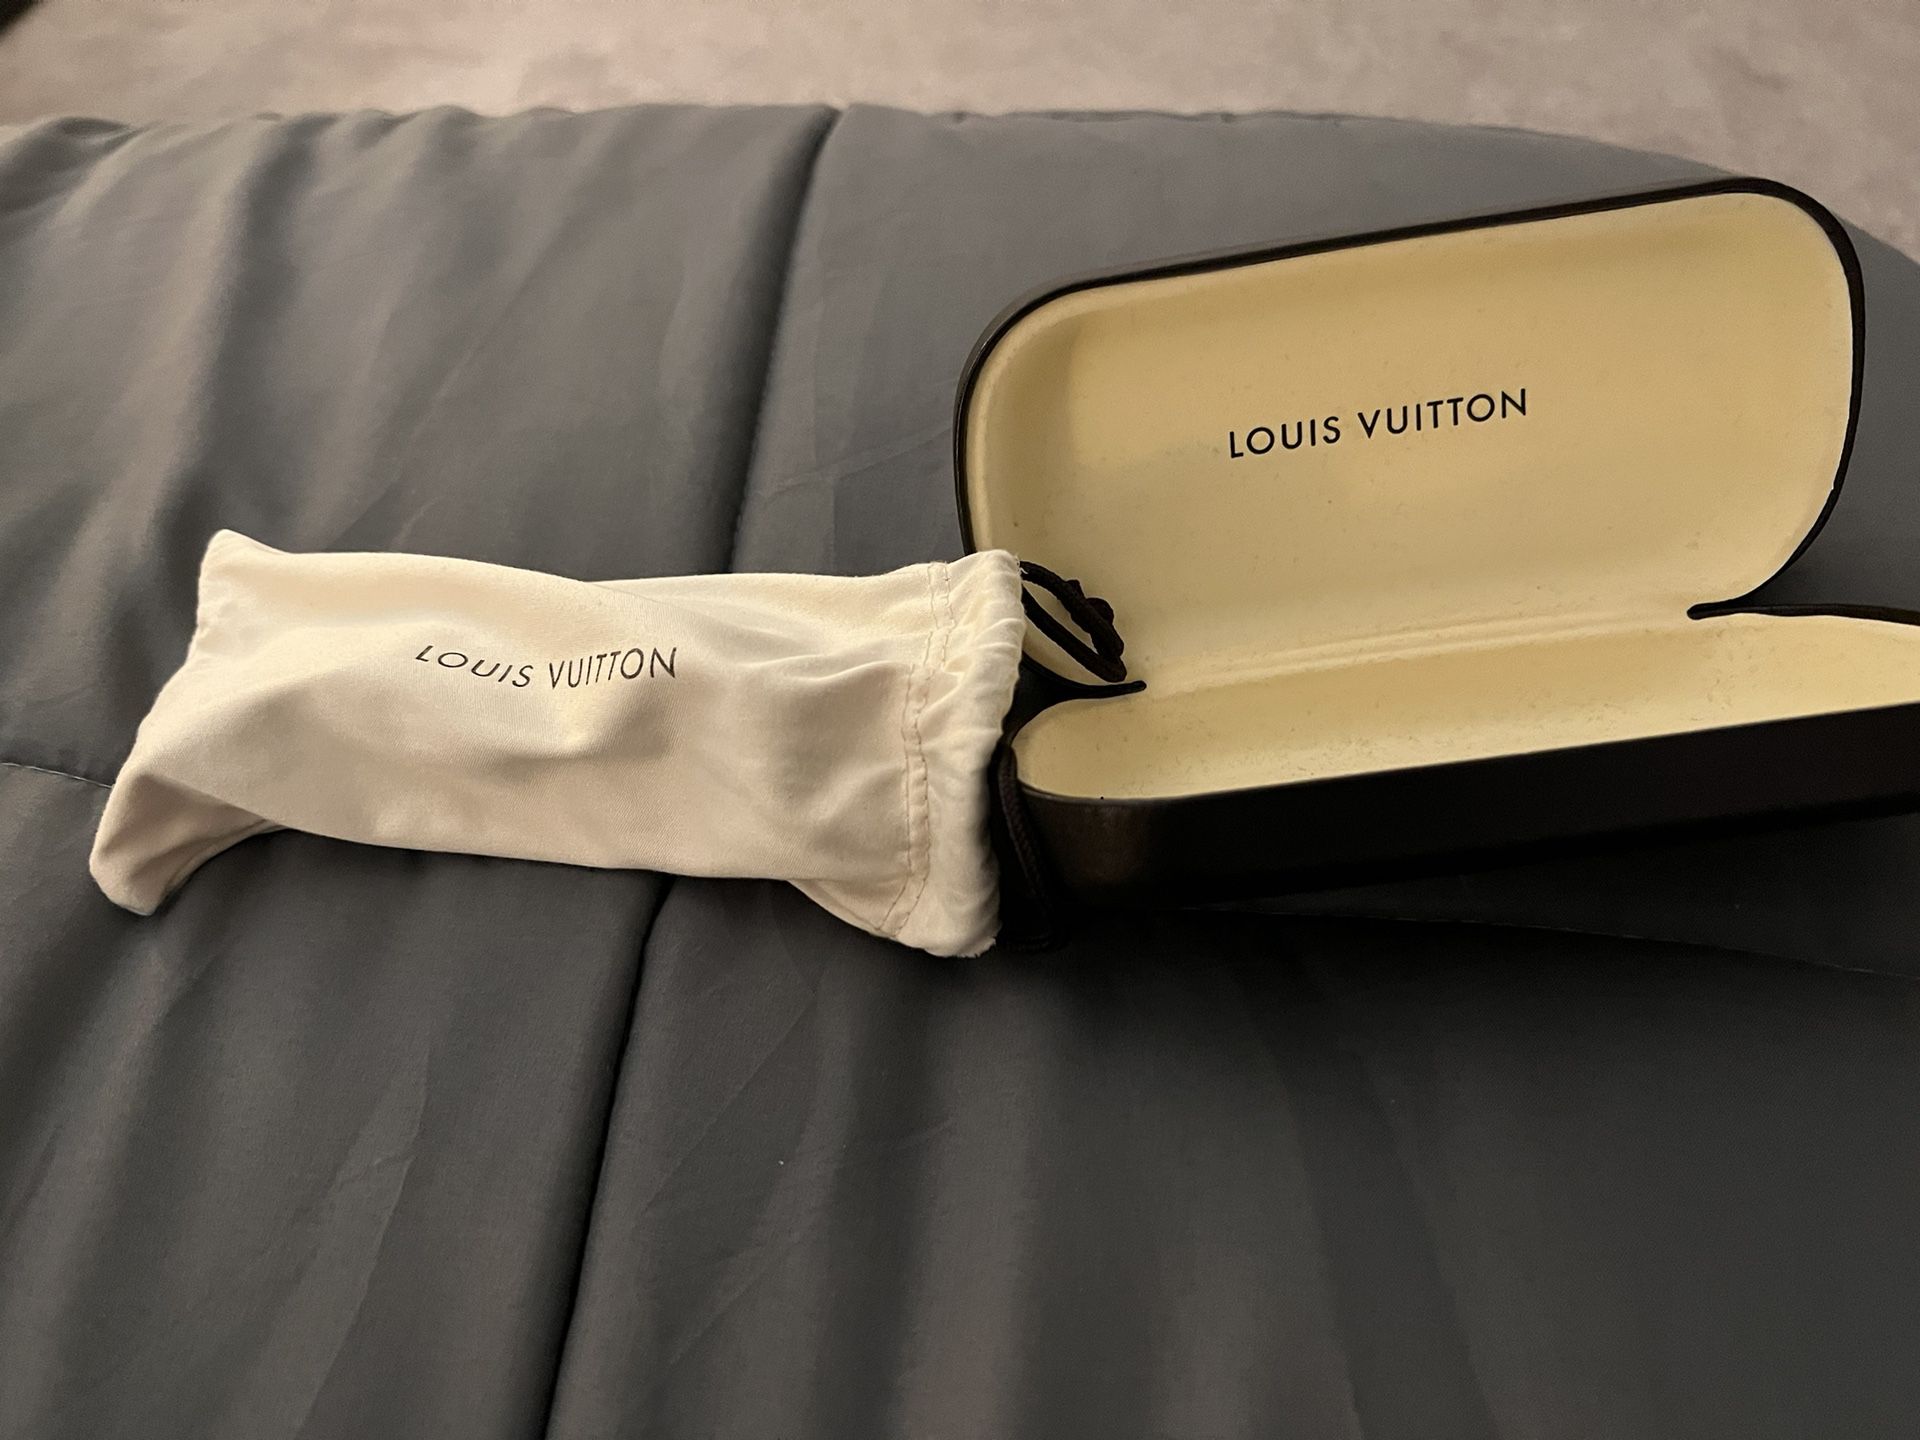 Louis Vuitton Men's Sunglasses for sale in Las Vegas, Nevada